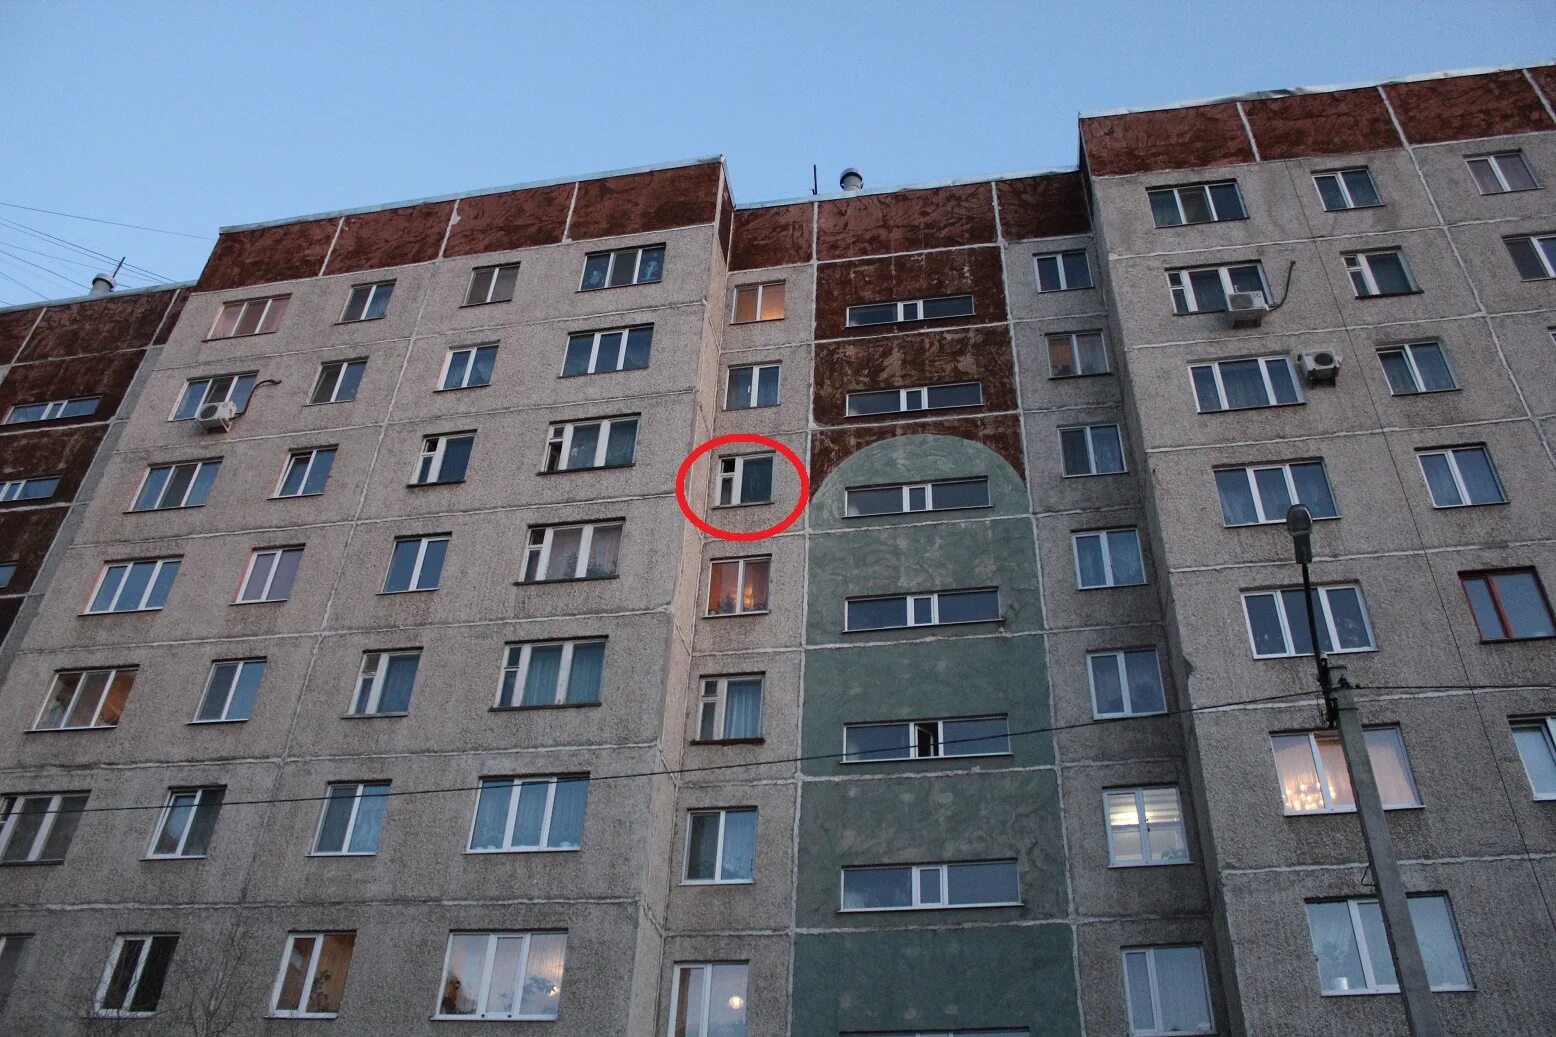 Вид с 8 этажа. Вид из окна 8 этажа. Восьмой этаж. Окно 8 этаж. Ооо 8 этаж